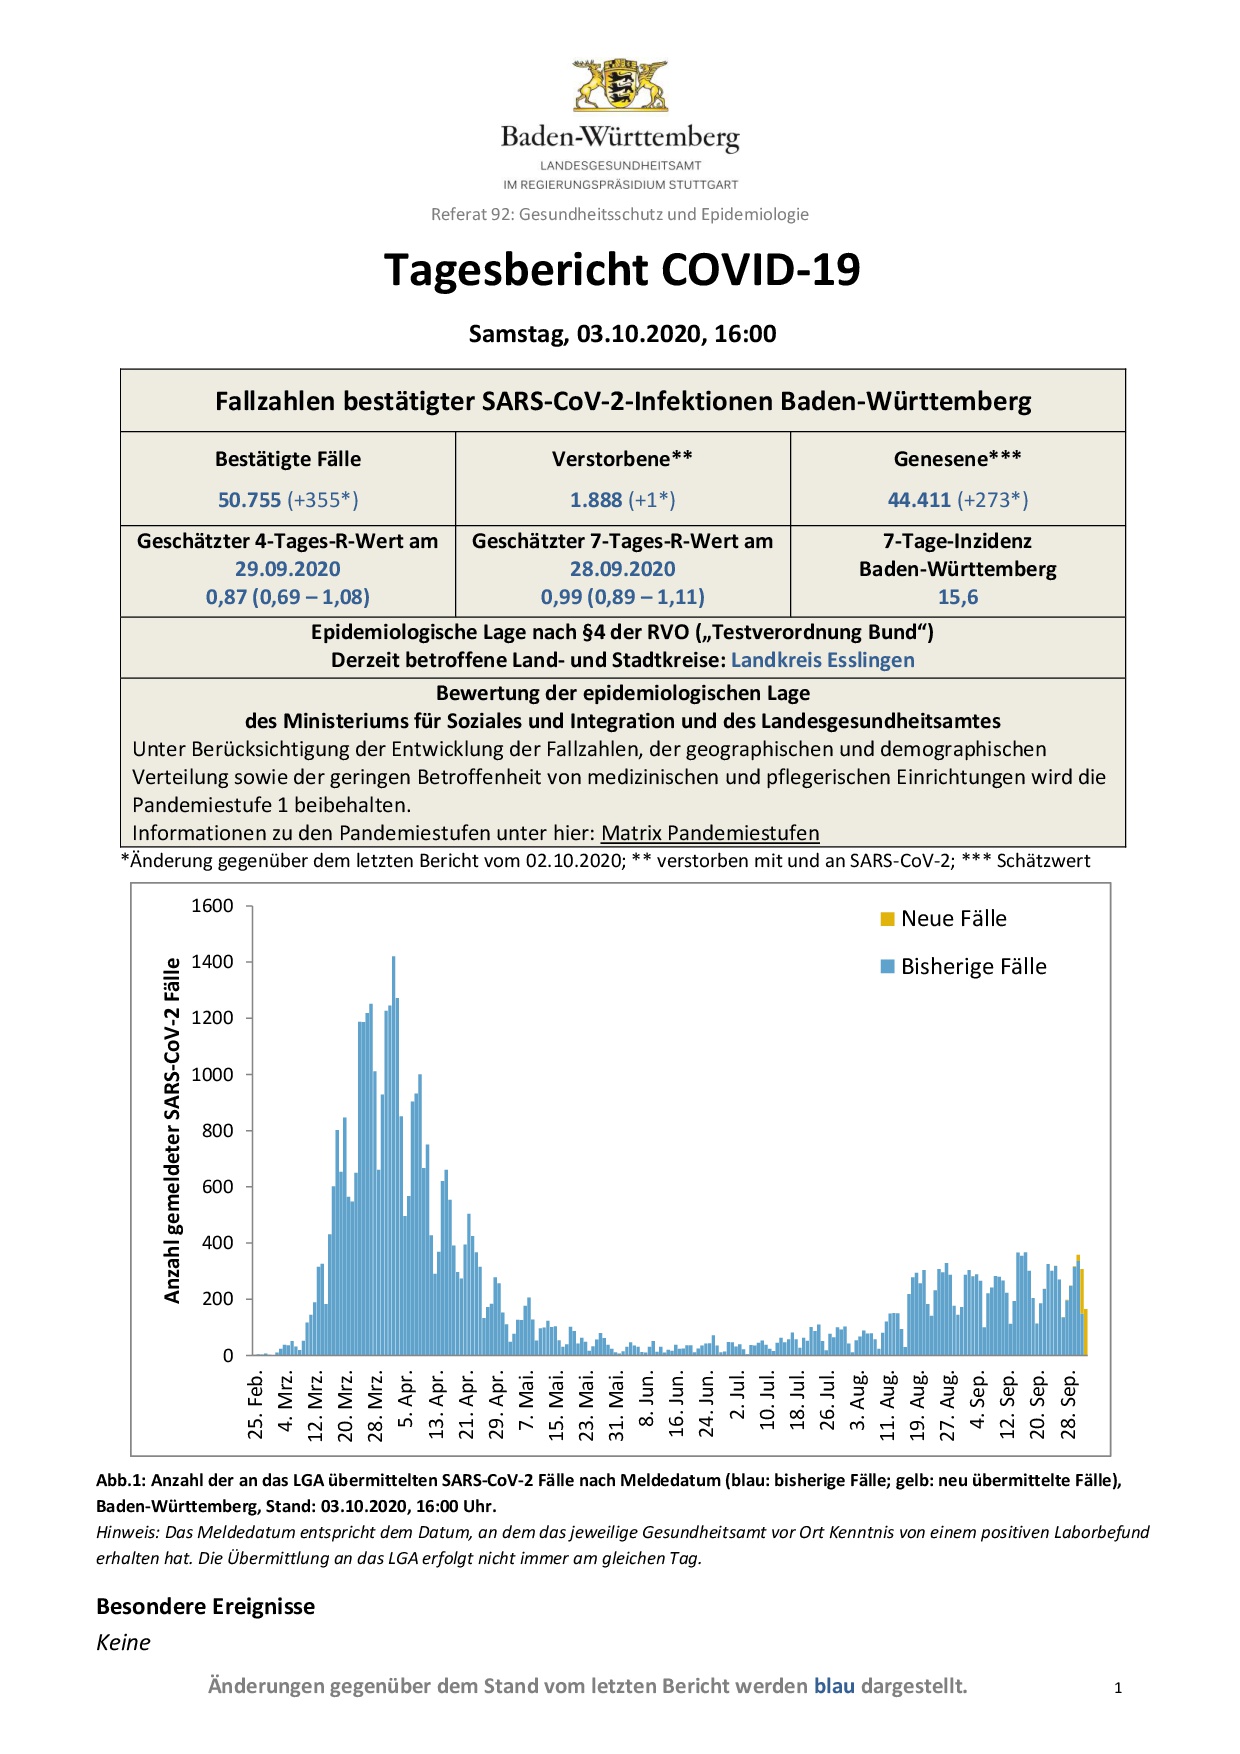 COVID-19 Tagesbericht (03.10.2020) des Landesgesundheitsamts Baden-Württemberg